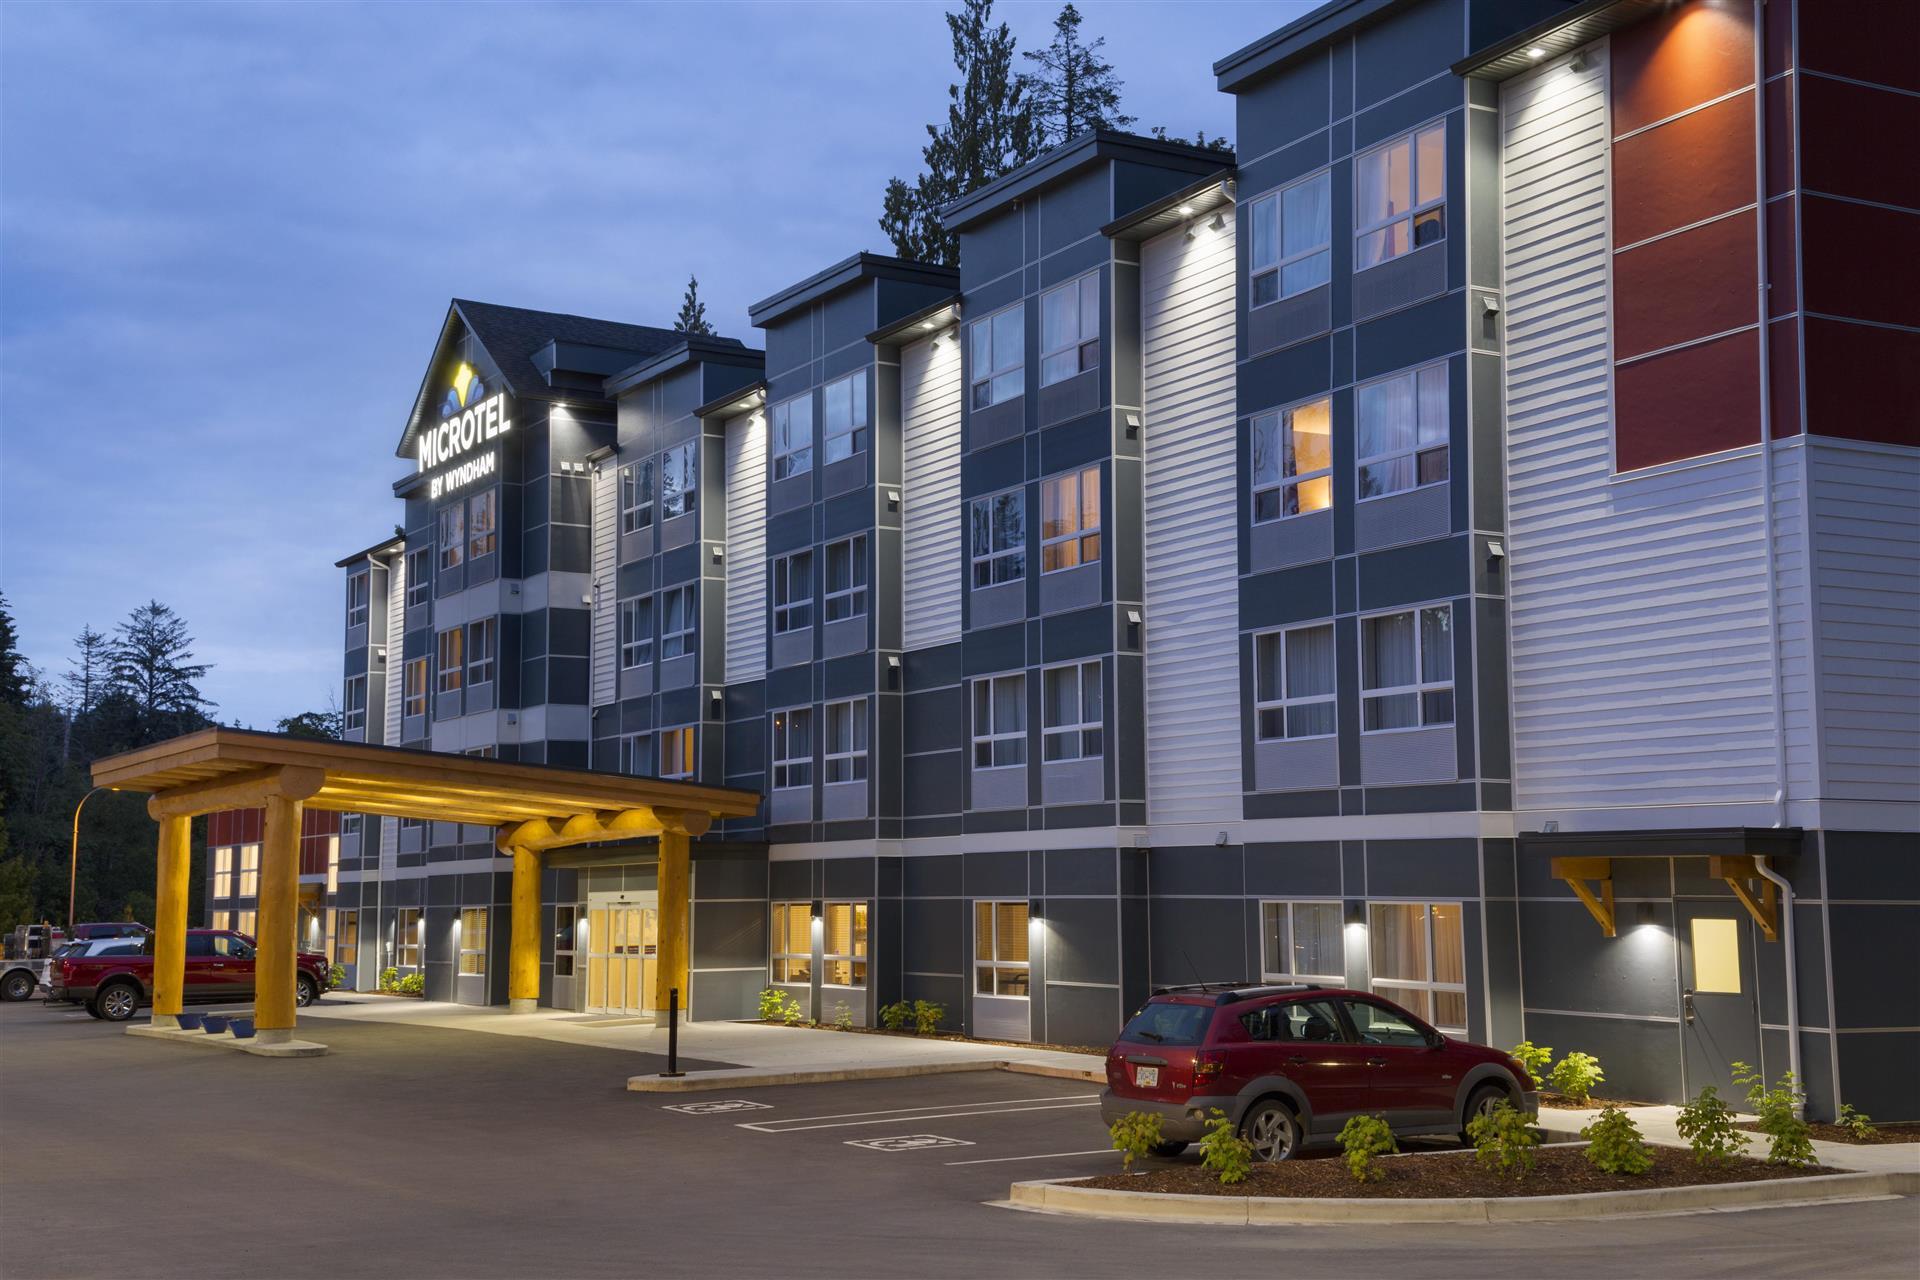 Microtel Inn & Suites by Wyndham Oyster Bay in Ladysmith, BC